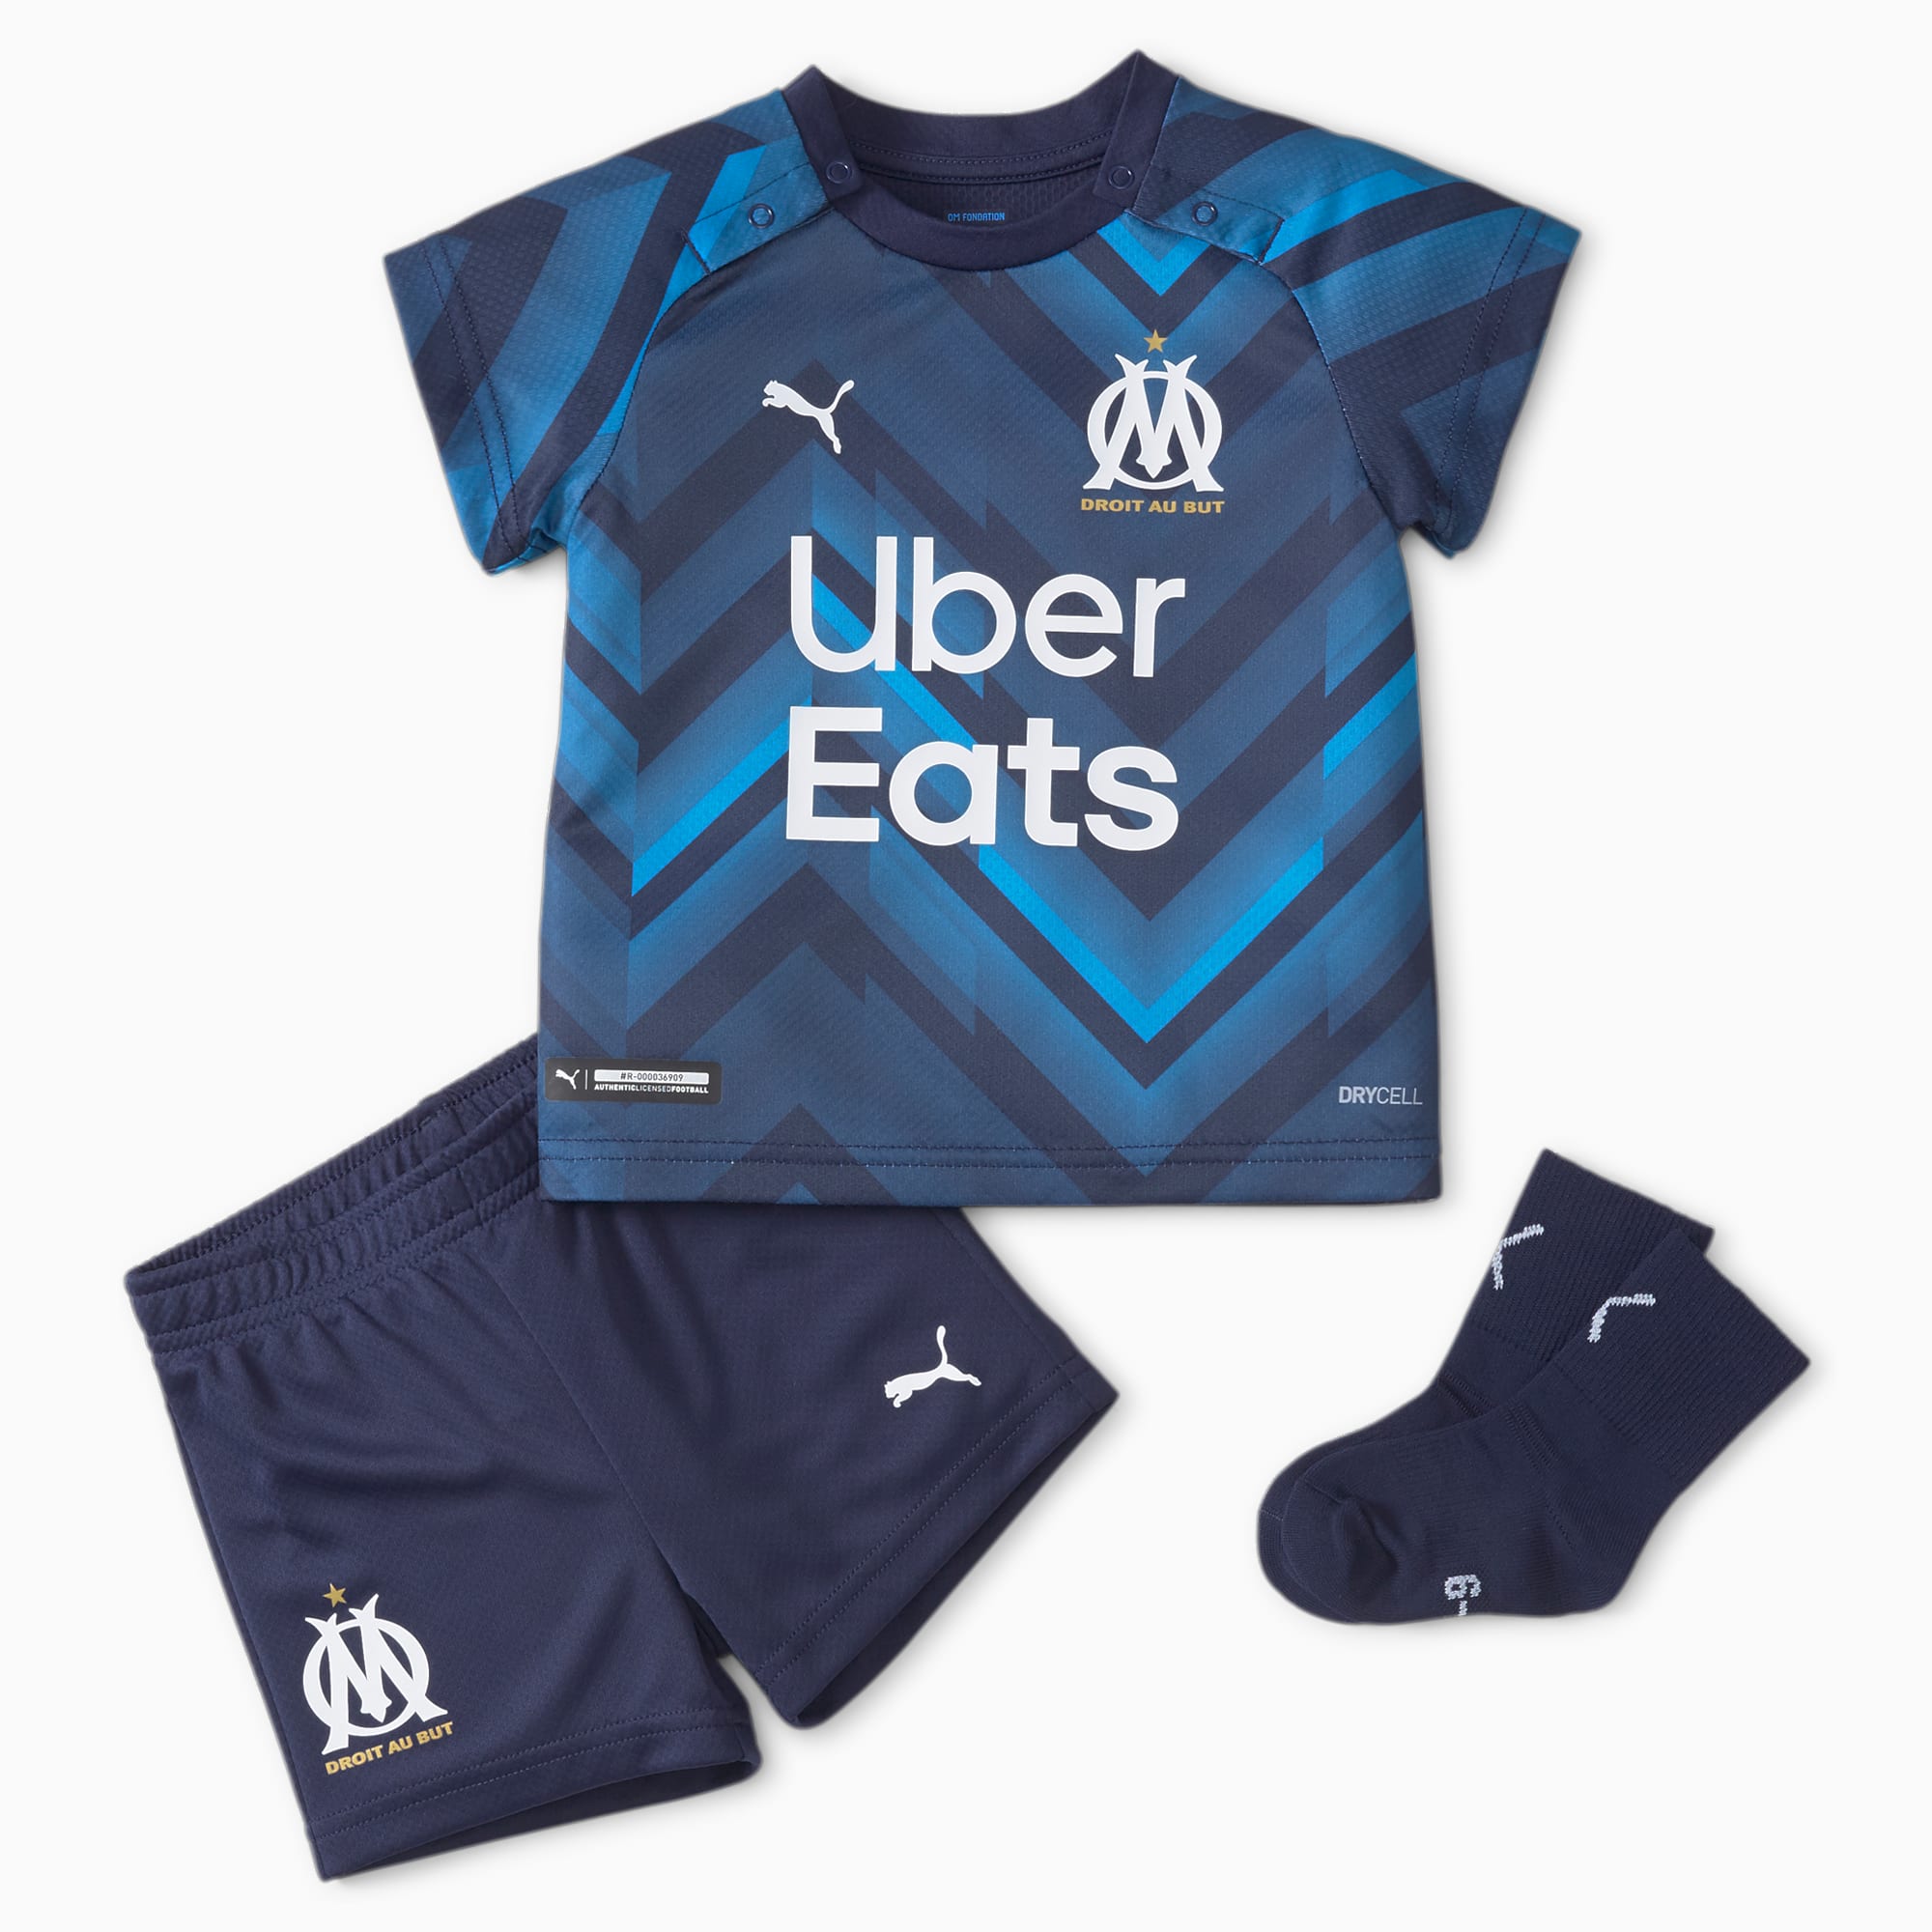 Om Away Babies Football Kit 21 22 Peacoat Bleu Azur Puma Olympique De Marseille Puma Germany